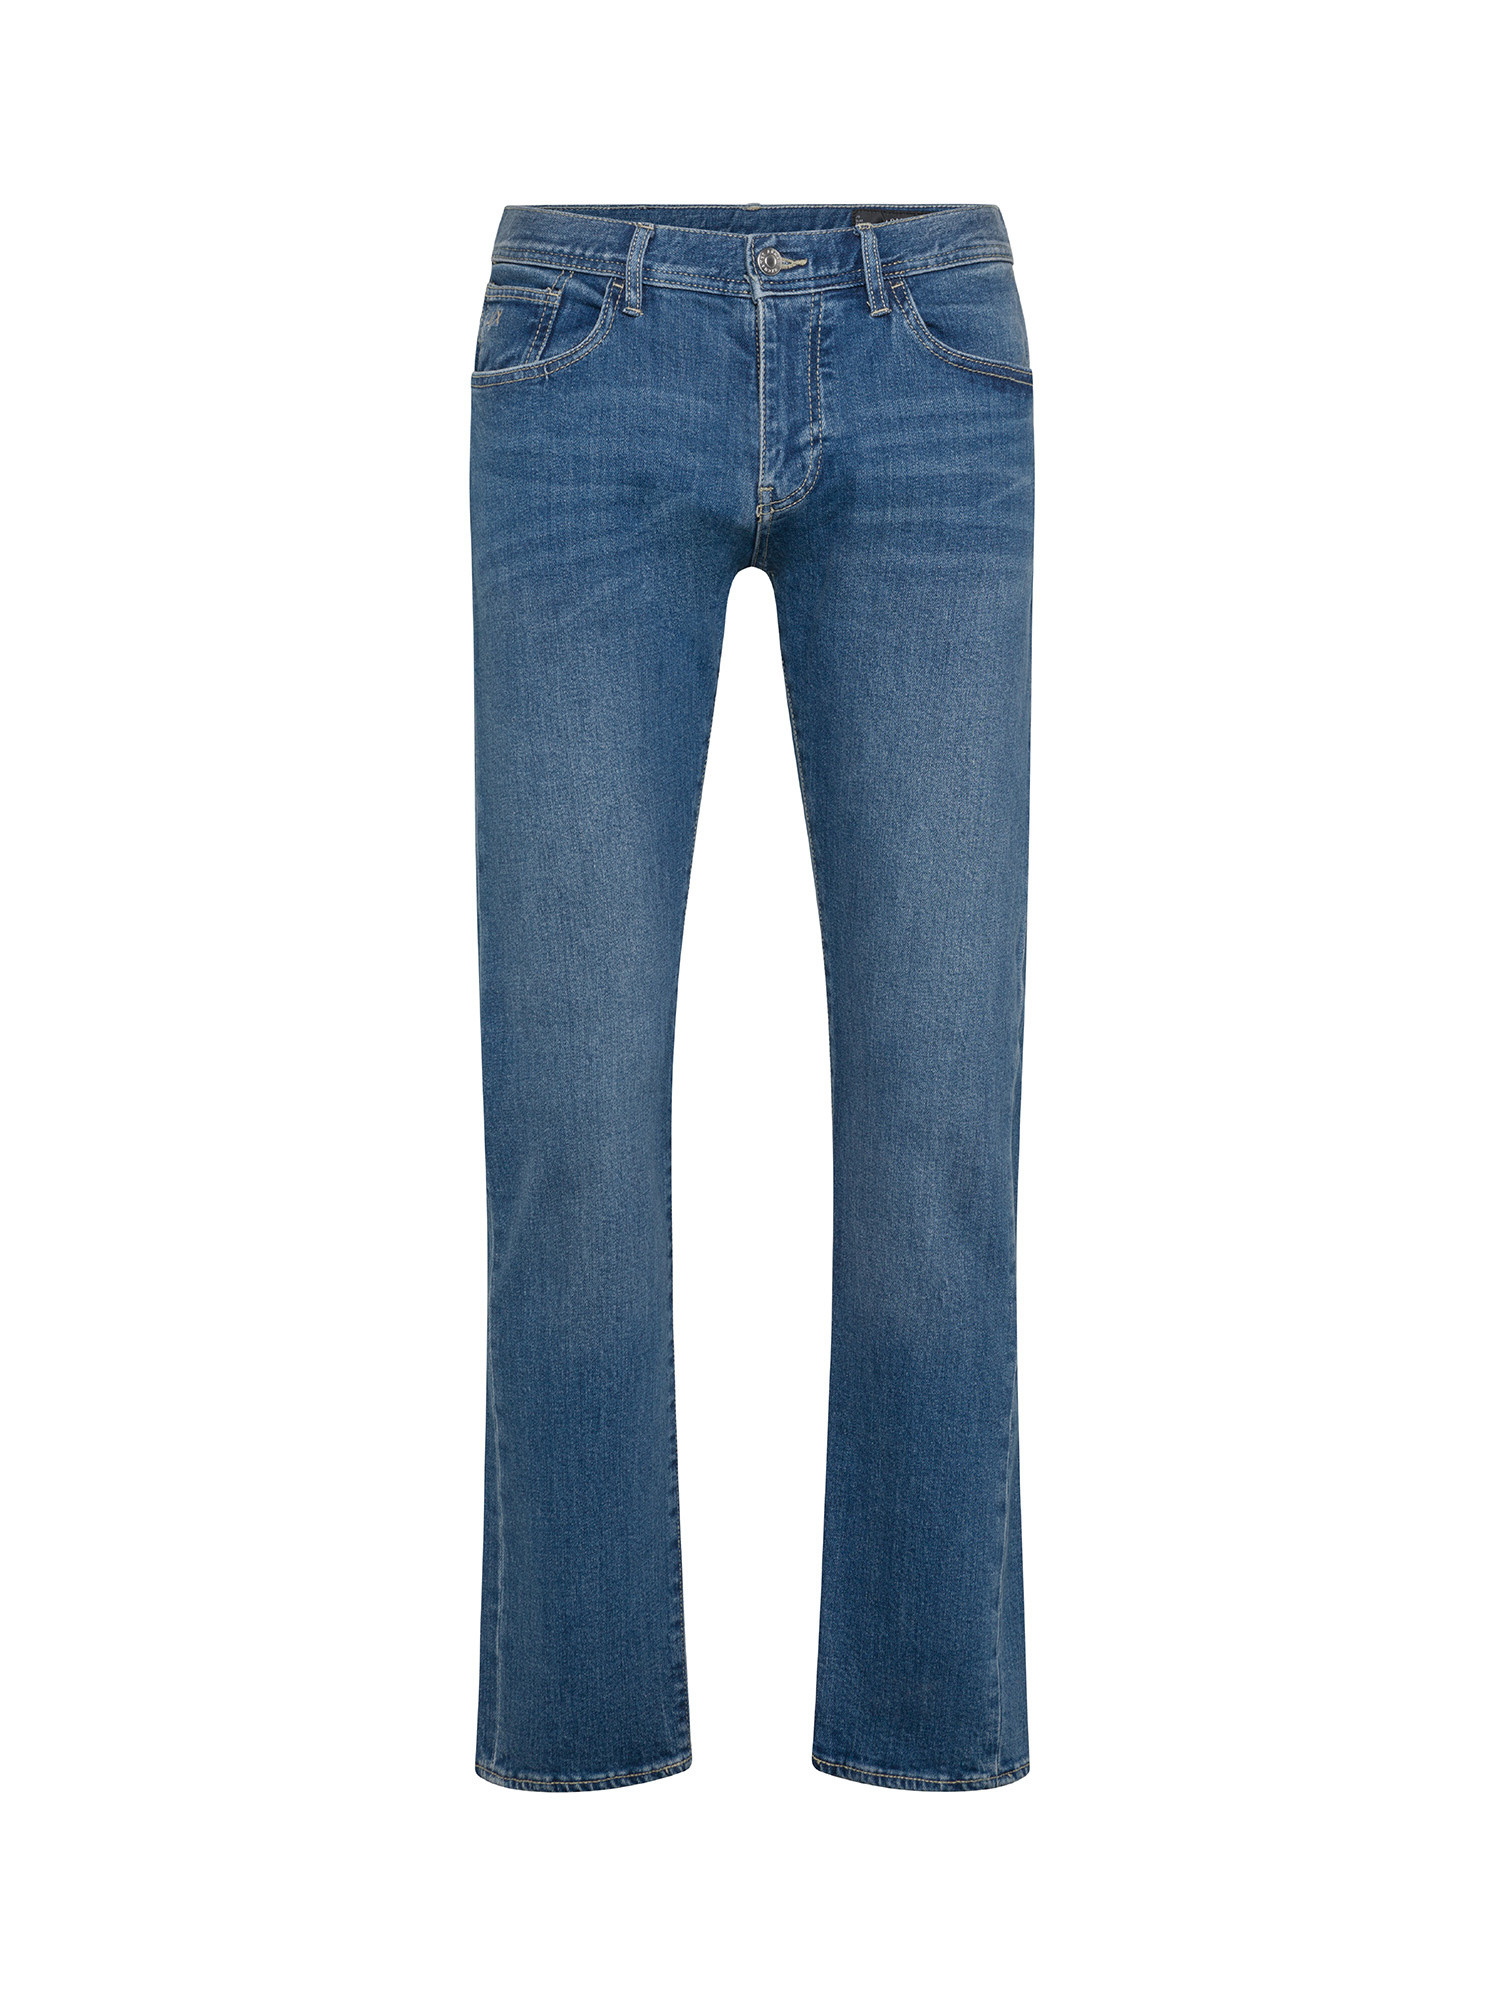 Armani Exchange - Jeans cinque tasche slim fit, Denim, large image number 0